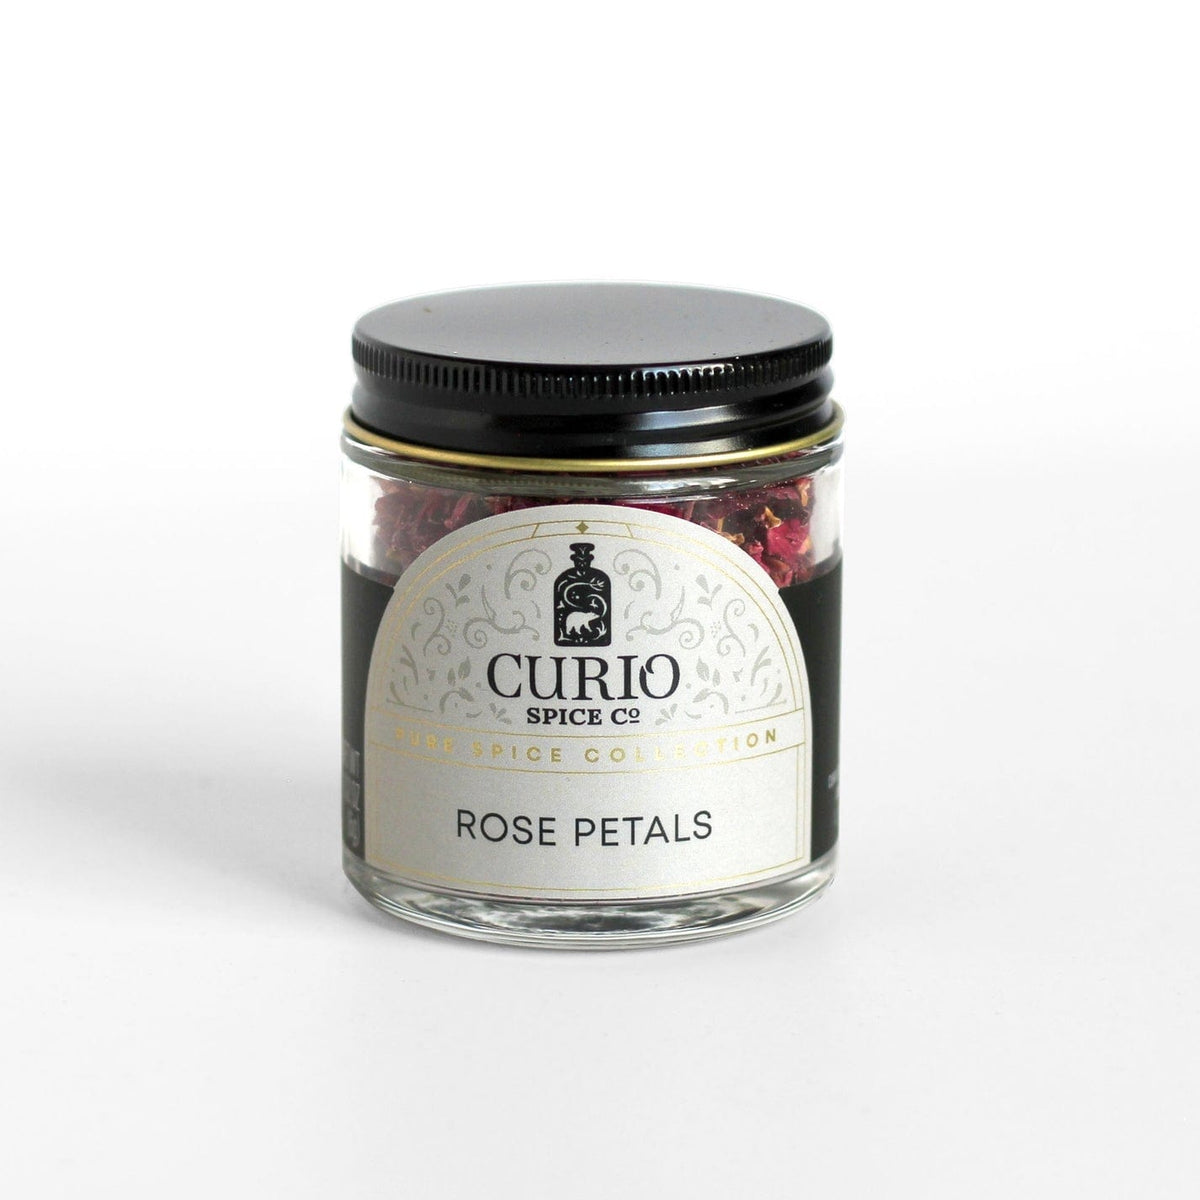 Curio Spice Co Rose Petals